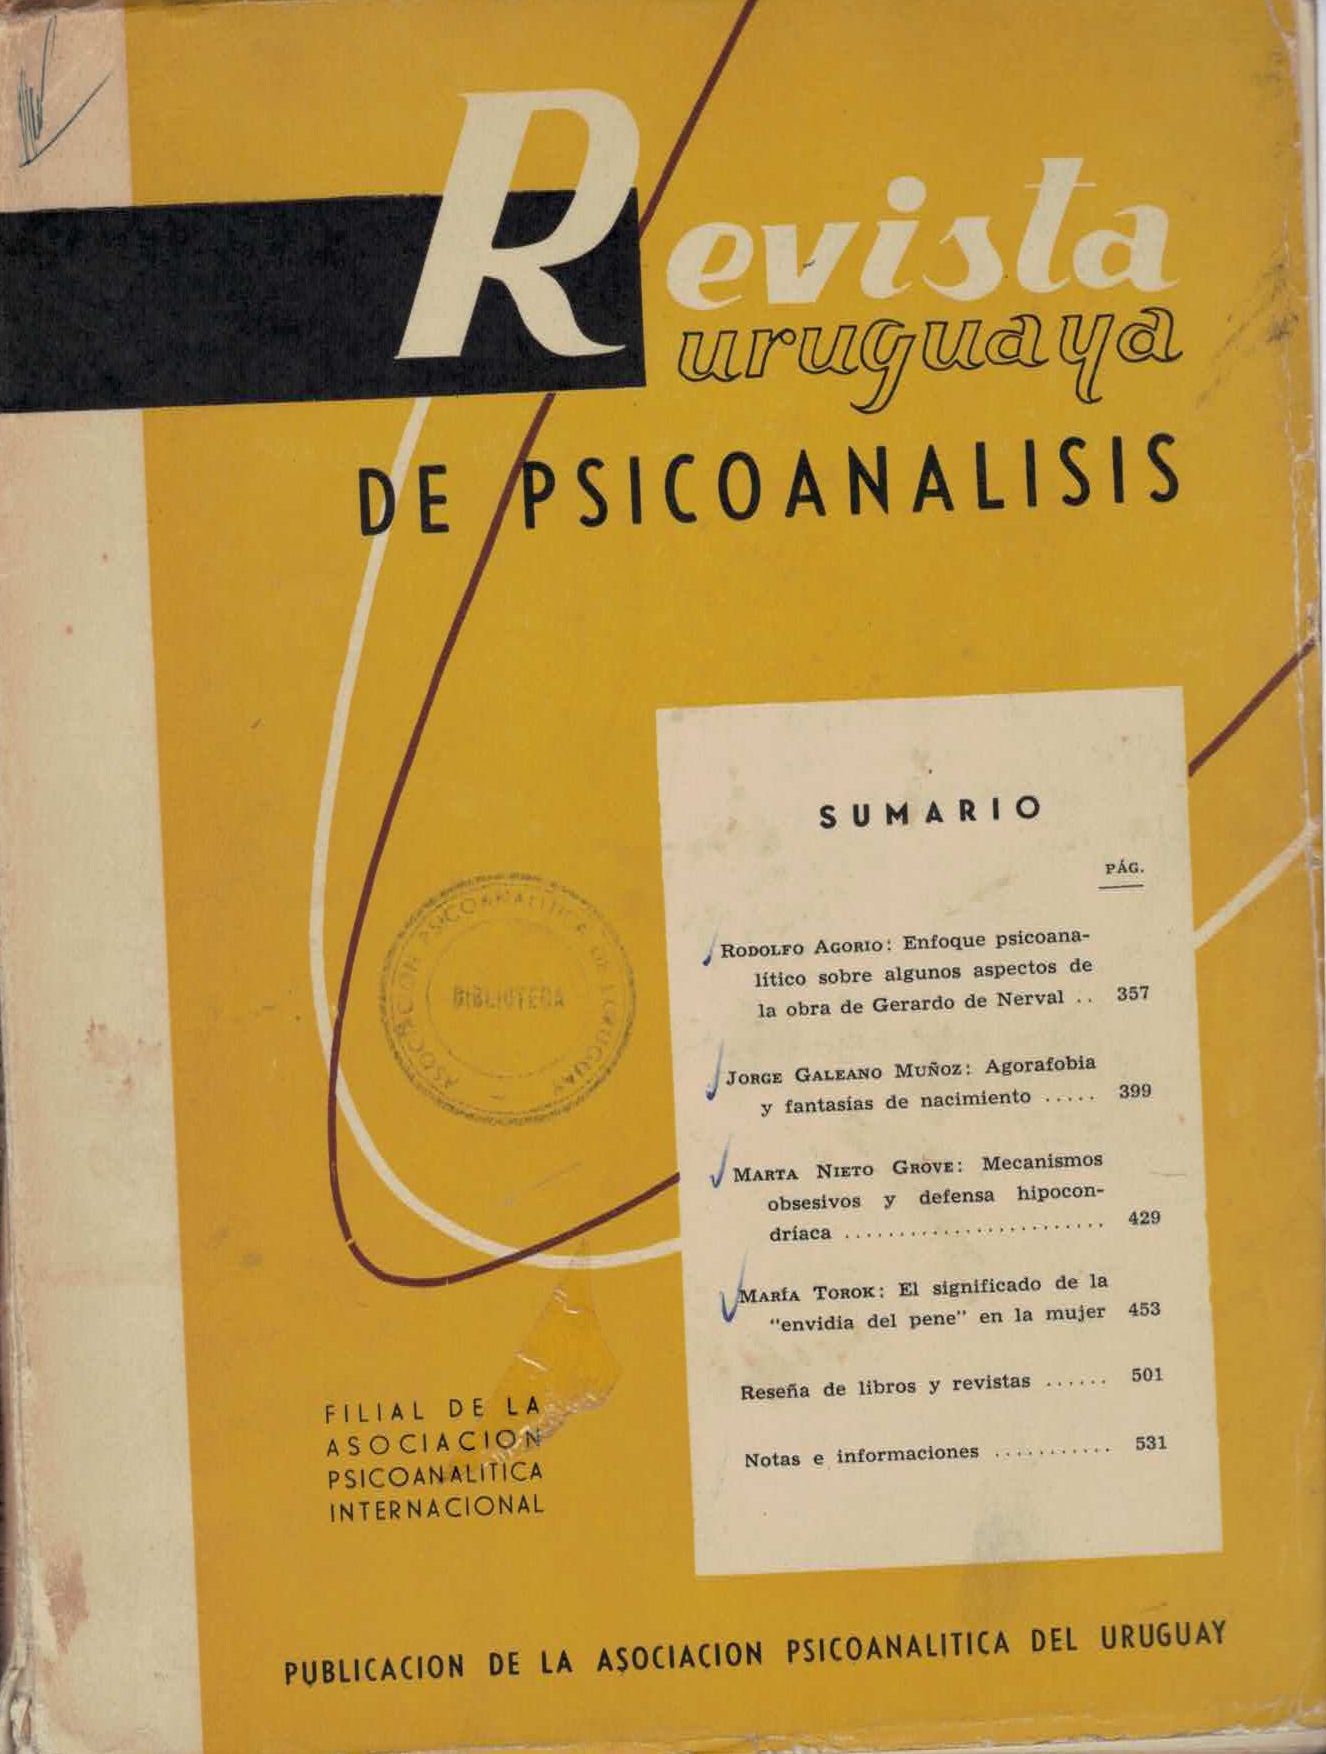 					Ver Vol. 6 Núm. 4 (1964): Revista Uruguaya de Psicoanálisis
				